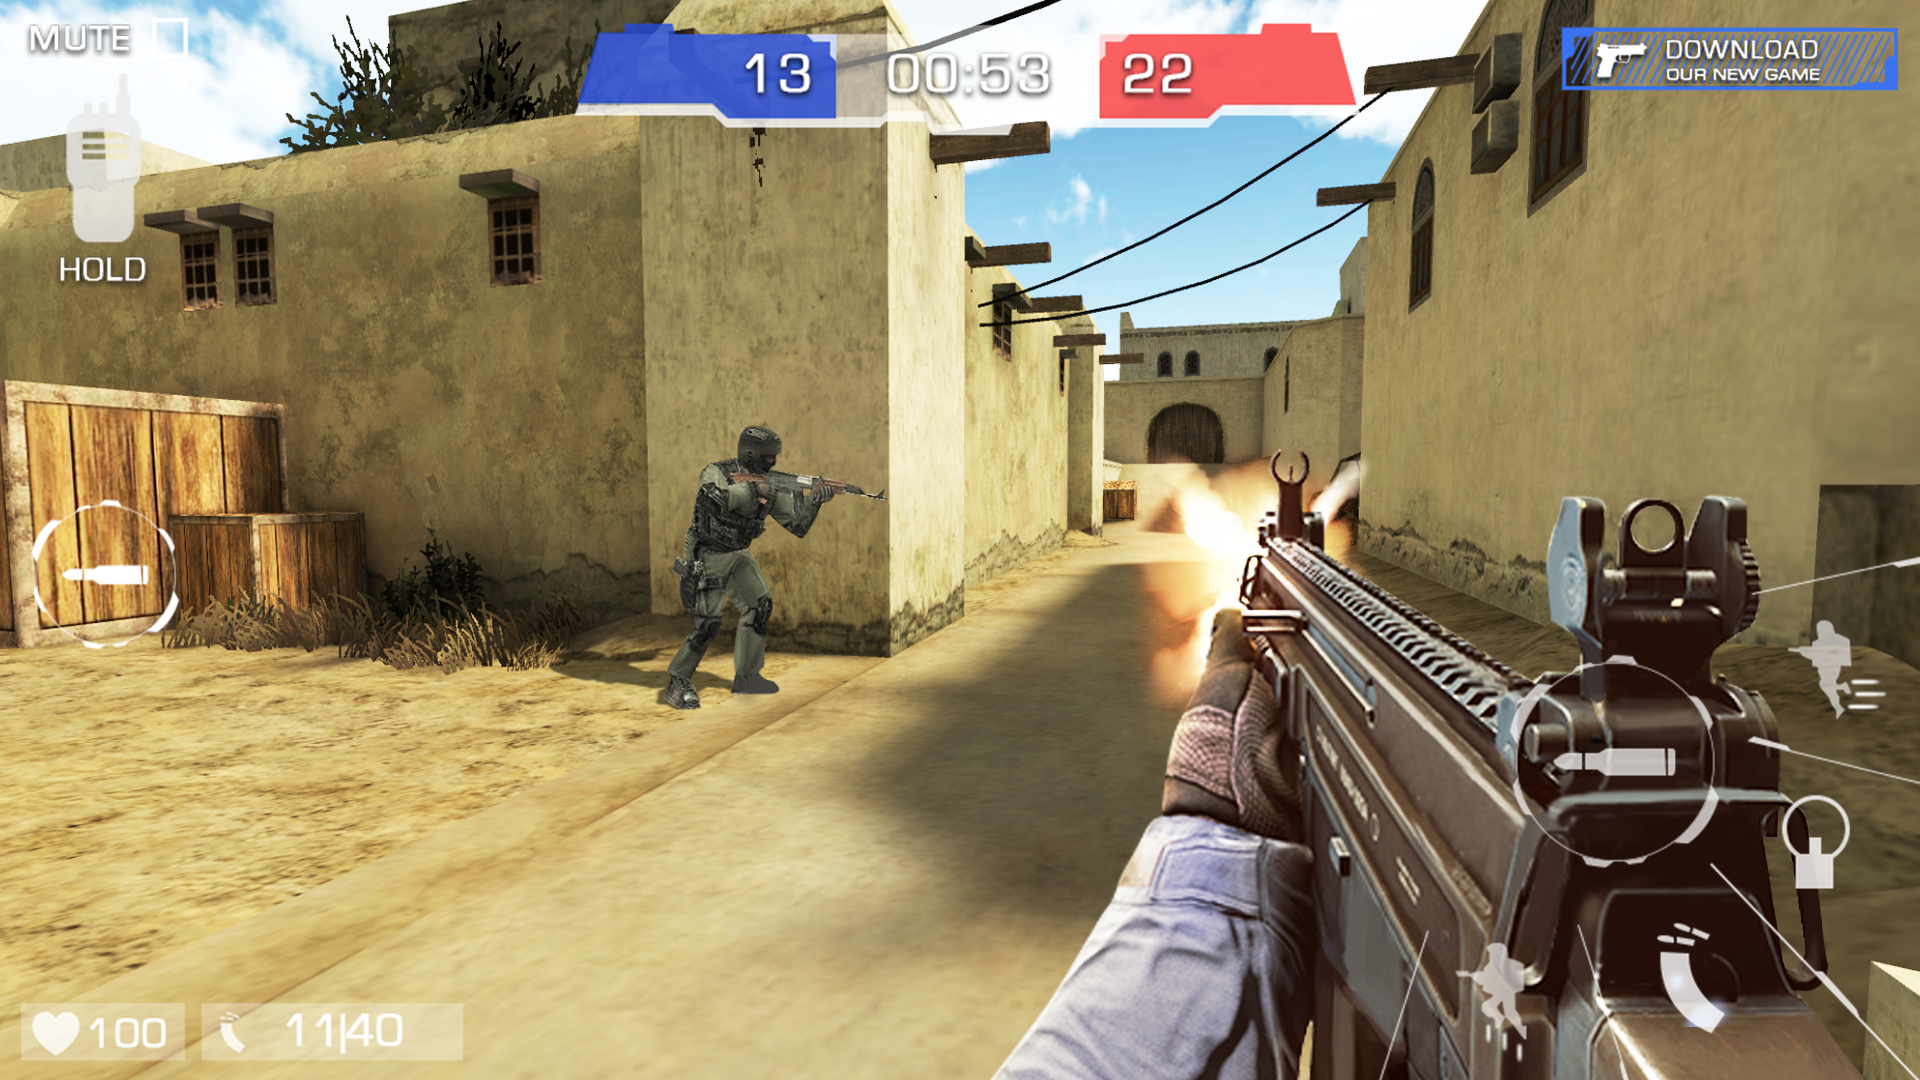 Screenshot 1 of Tembakan Counter Terrorist 3.1.9